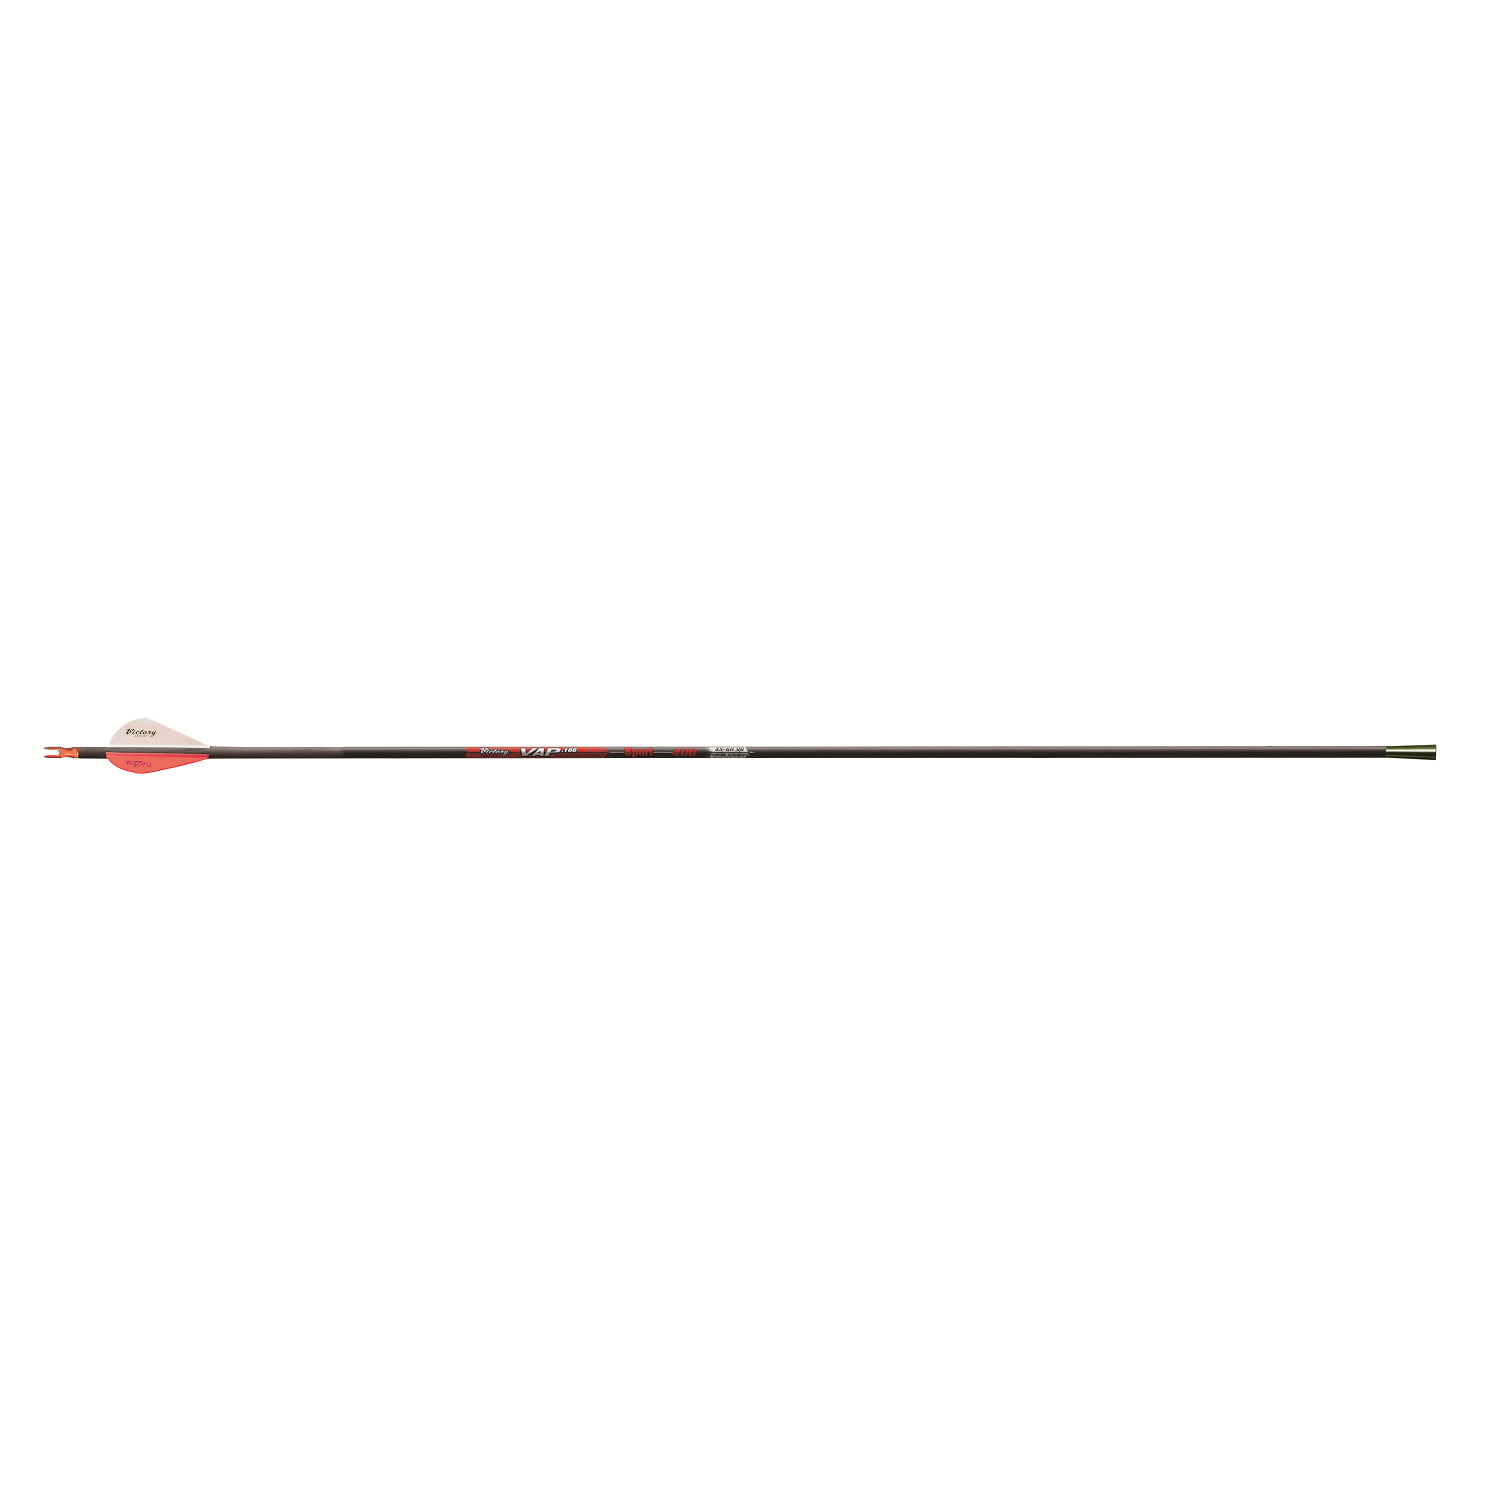 Black Victory Archery .001 450 Fletched VAP Elite Arrows Pack of 6 